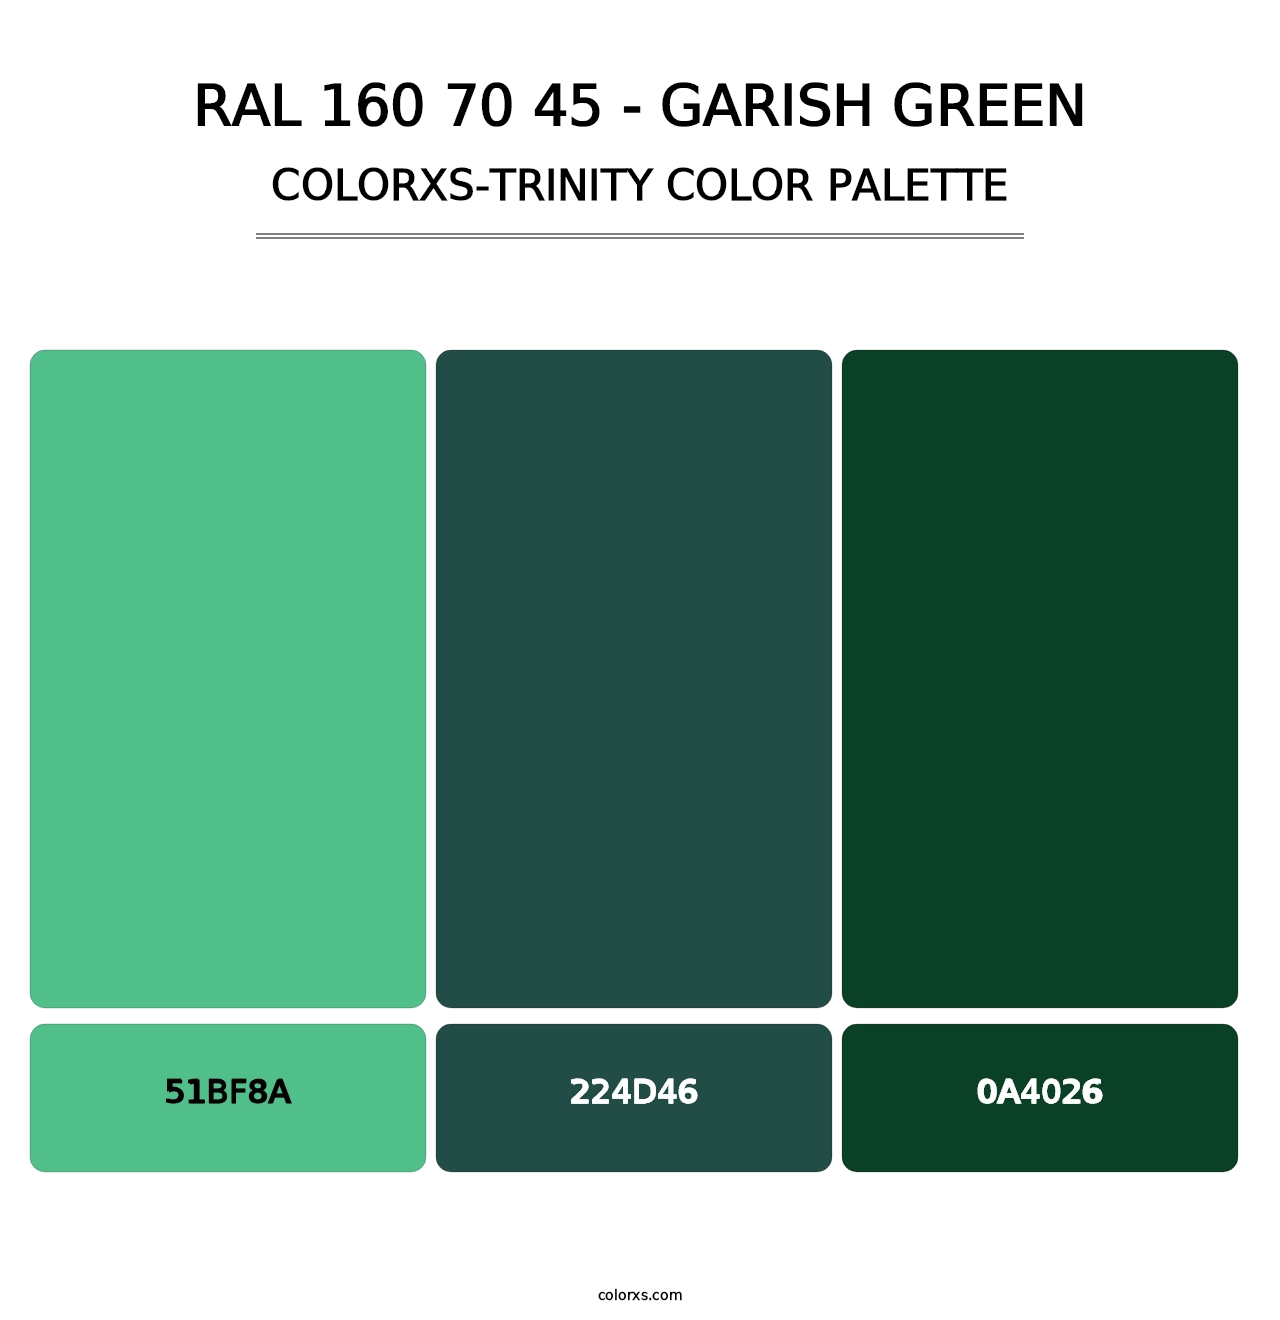 RAL 160 70 45 - Garish Green - Colorxs Trinity Palette